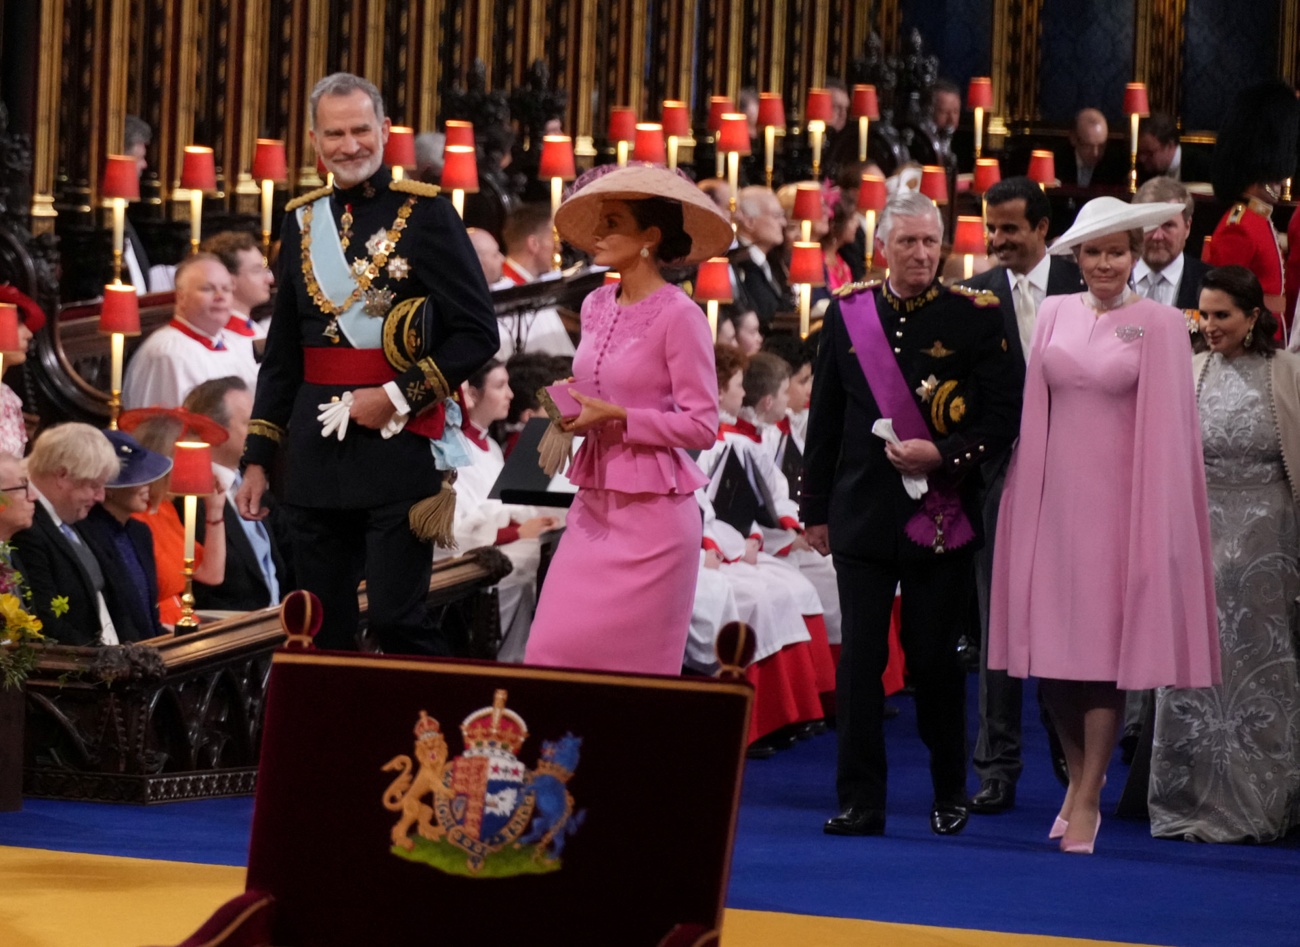 Fascinating and avant-garde: Letizia of Spain chooses fantastic Carolina Herrera outfit and amazing headdress at the coronation of Carlos III